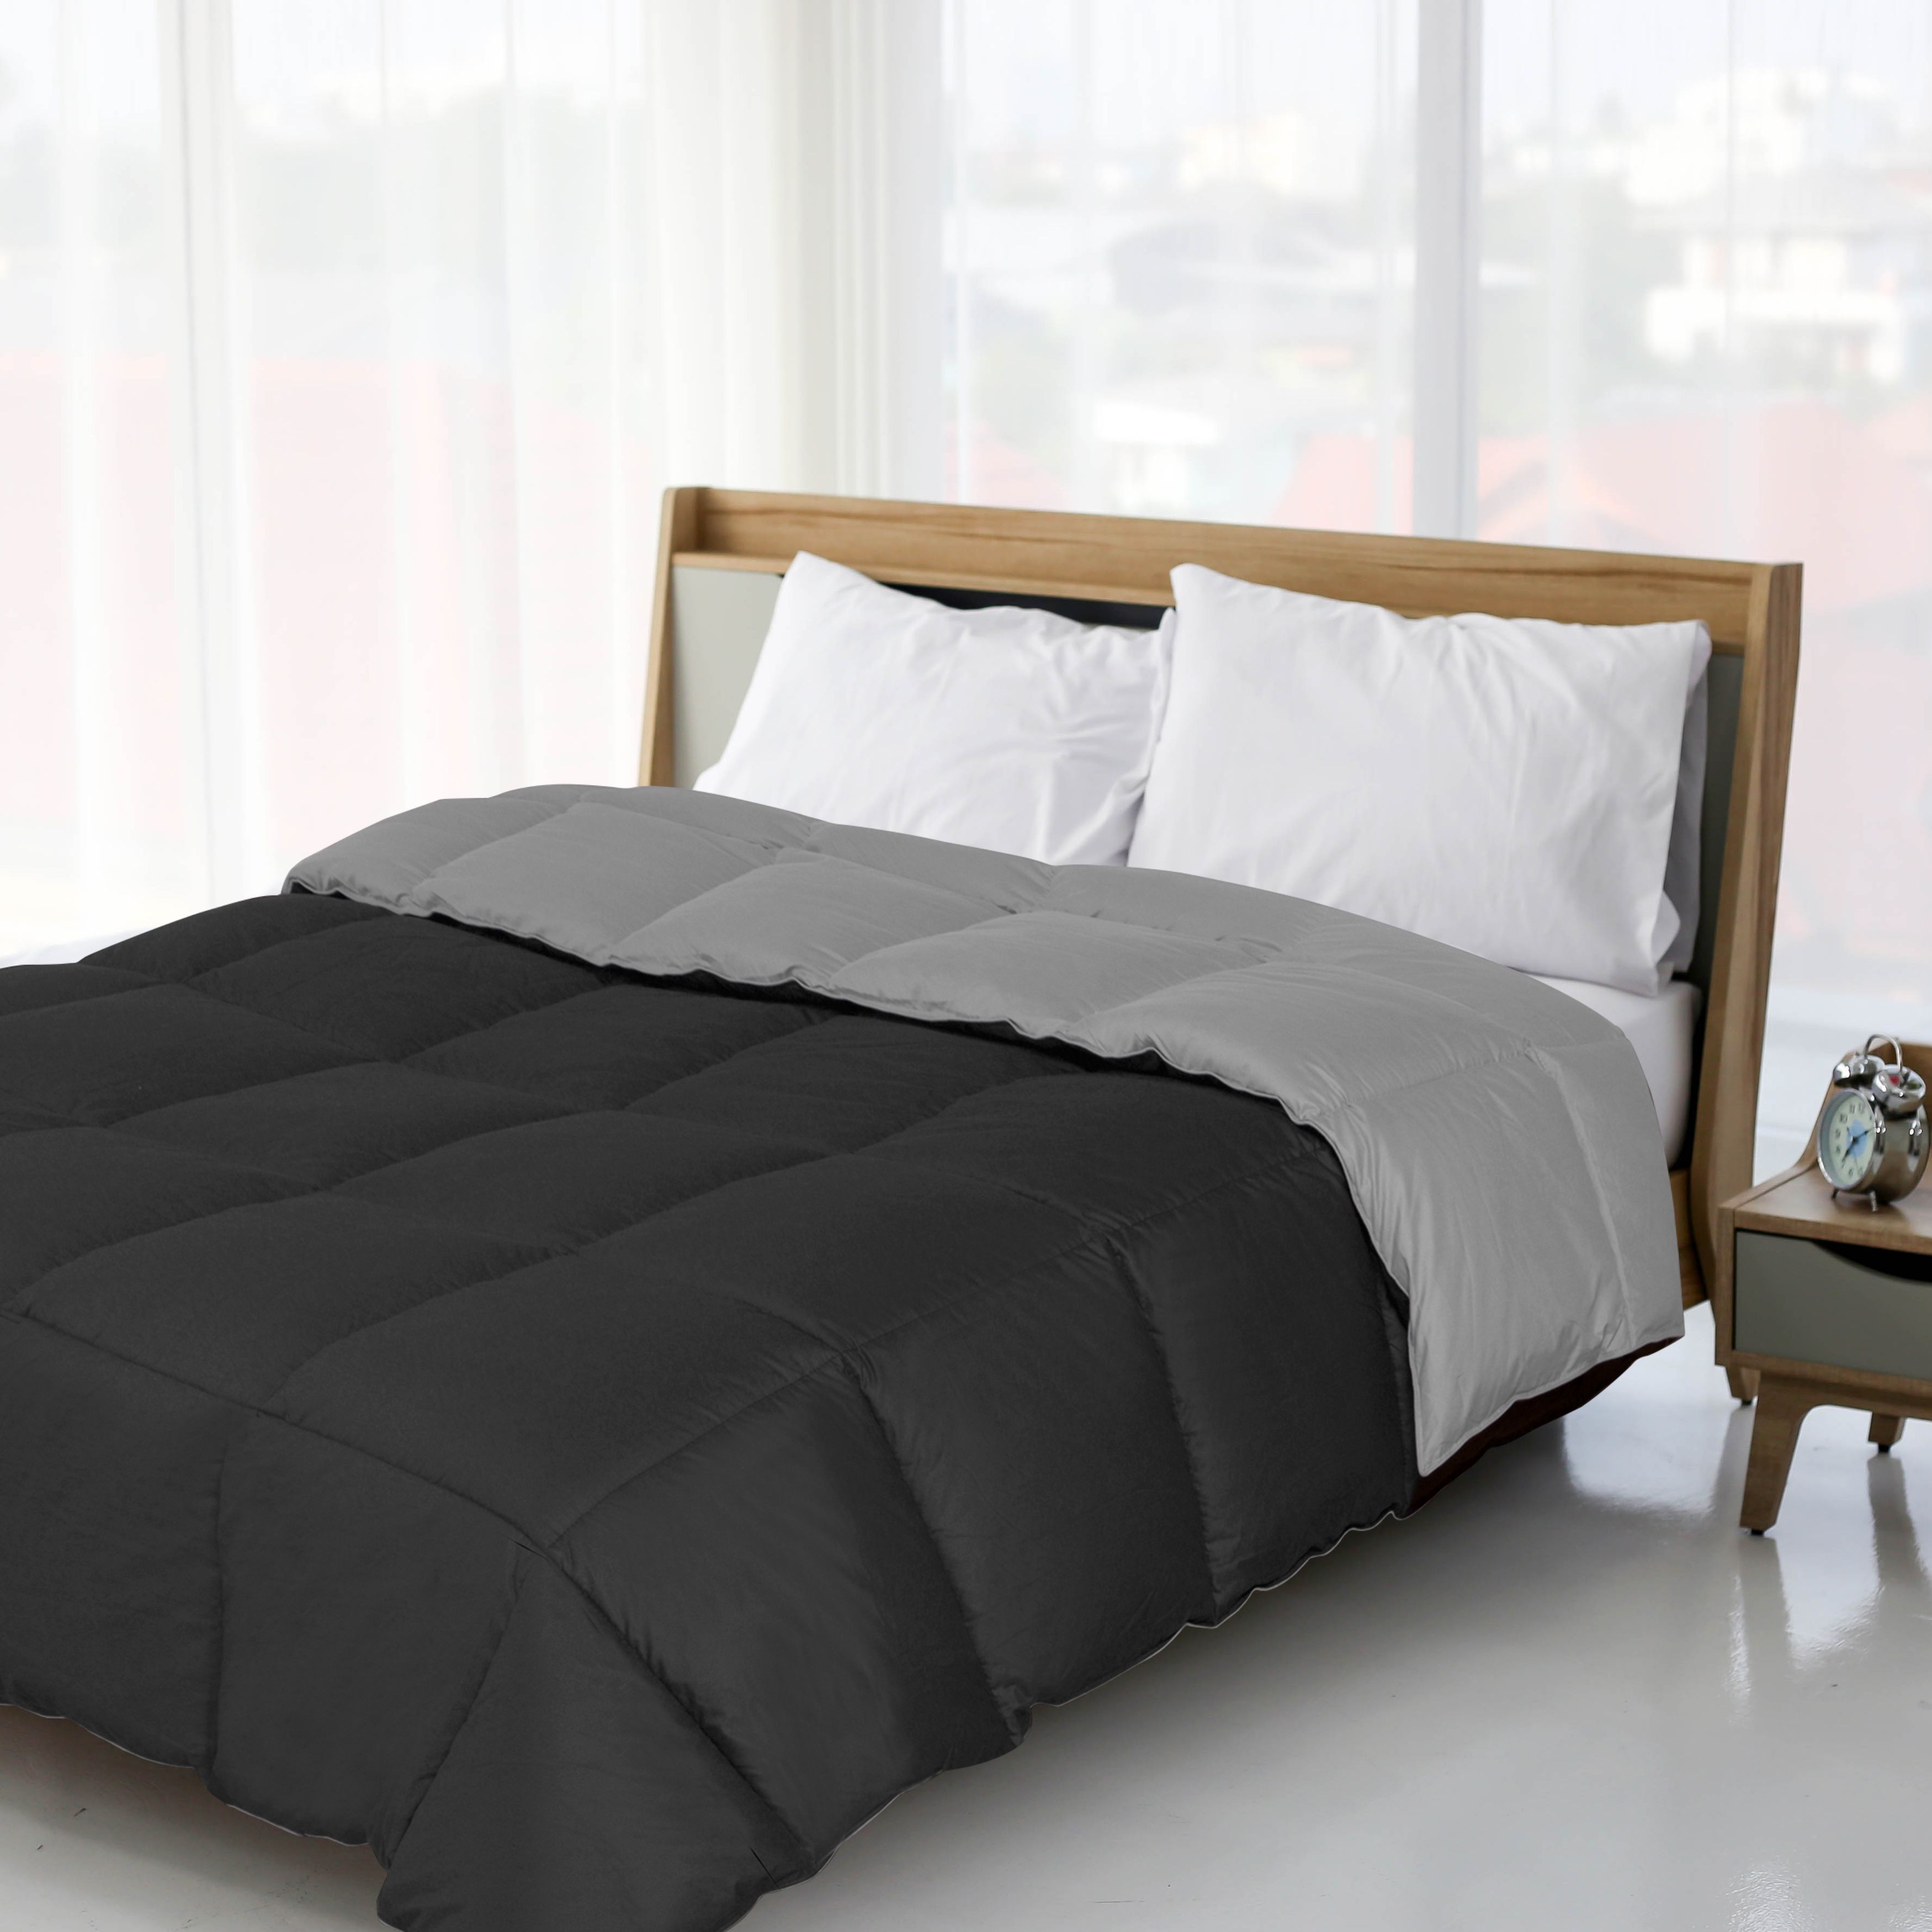 Superior Down Alternative Reversible Comforter, Full/ Queen, Black/ Grey - image 2 of 3